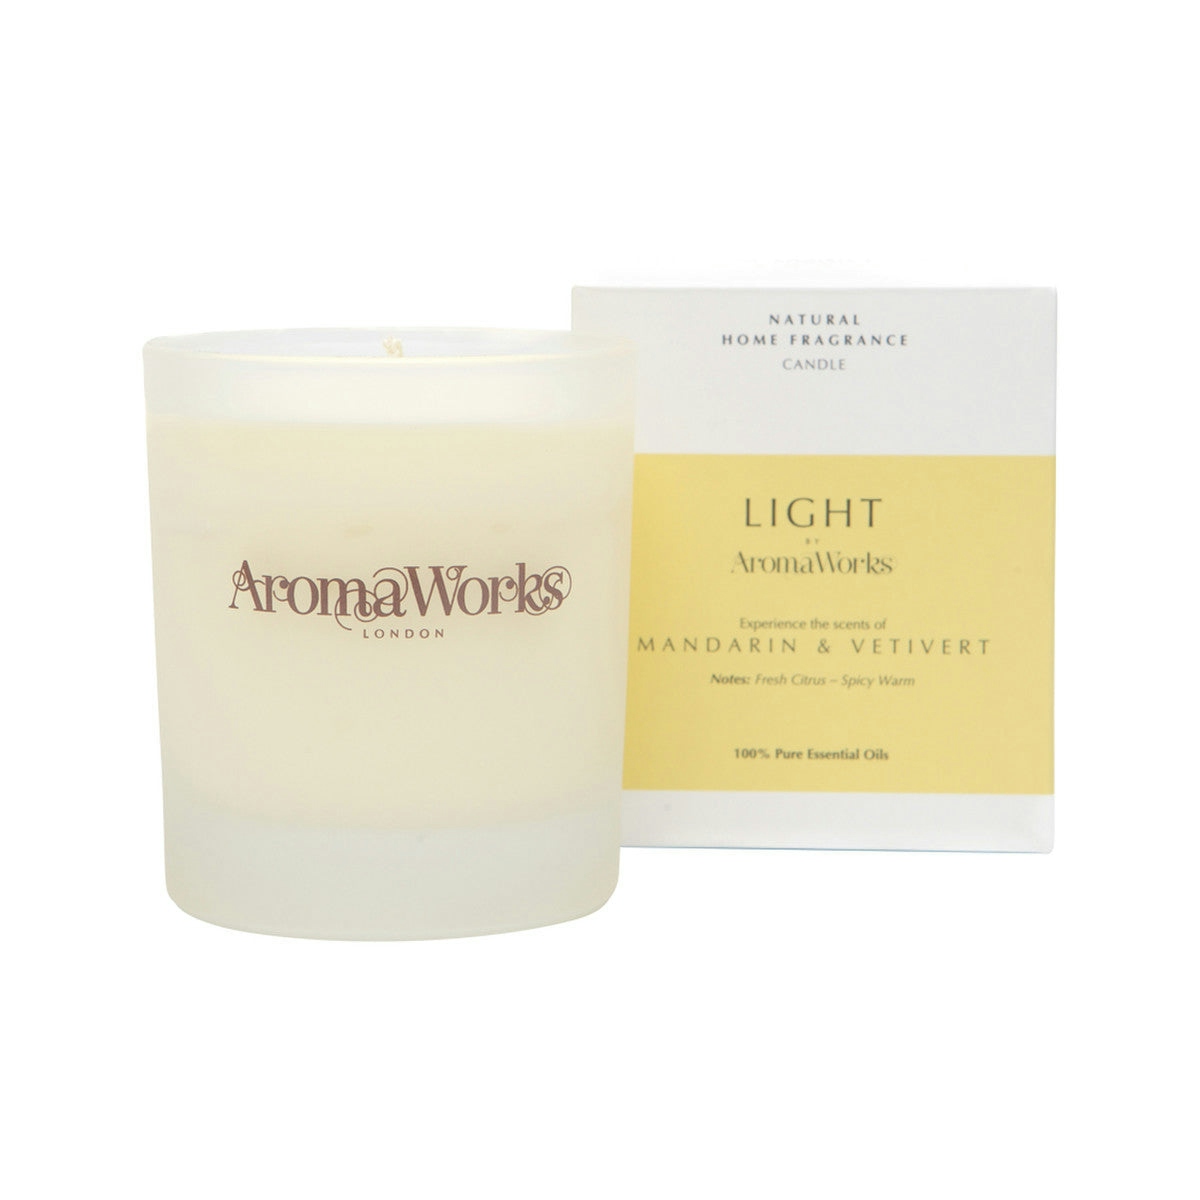 image of AromaWorks Light Candle Mandarin & Vetivert Medium 220g on white background